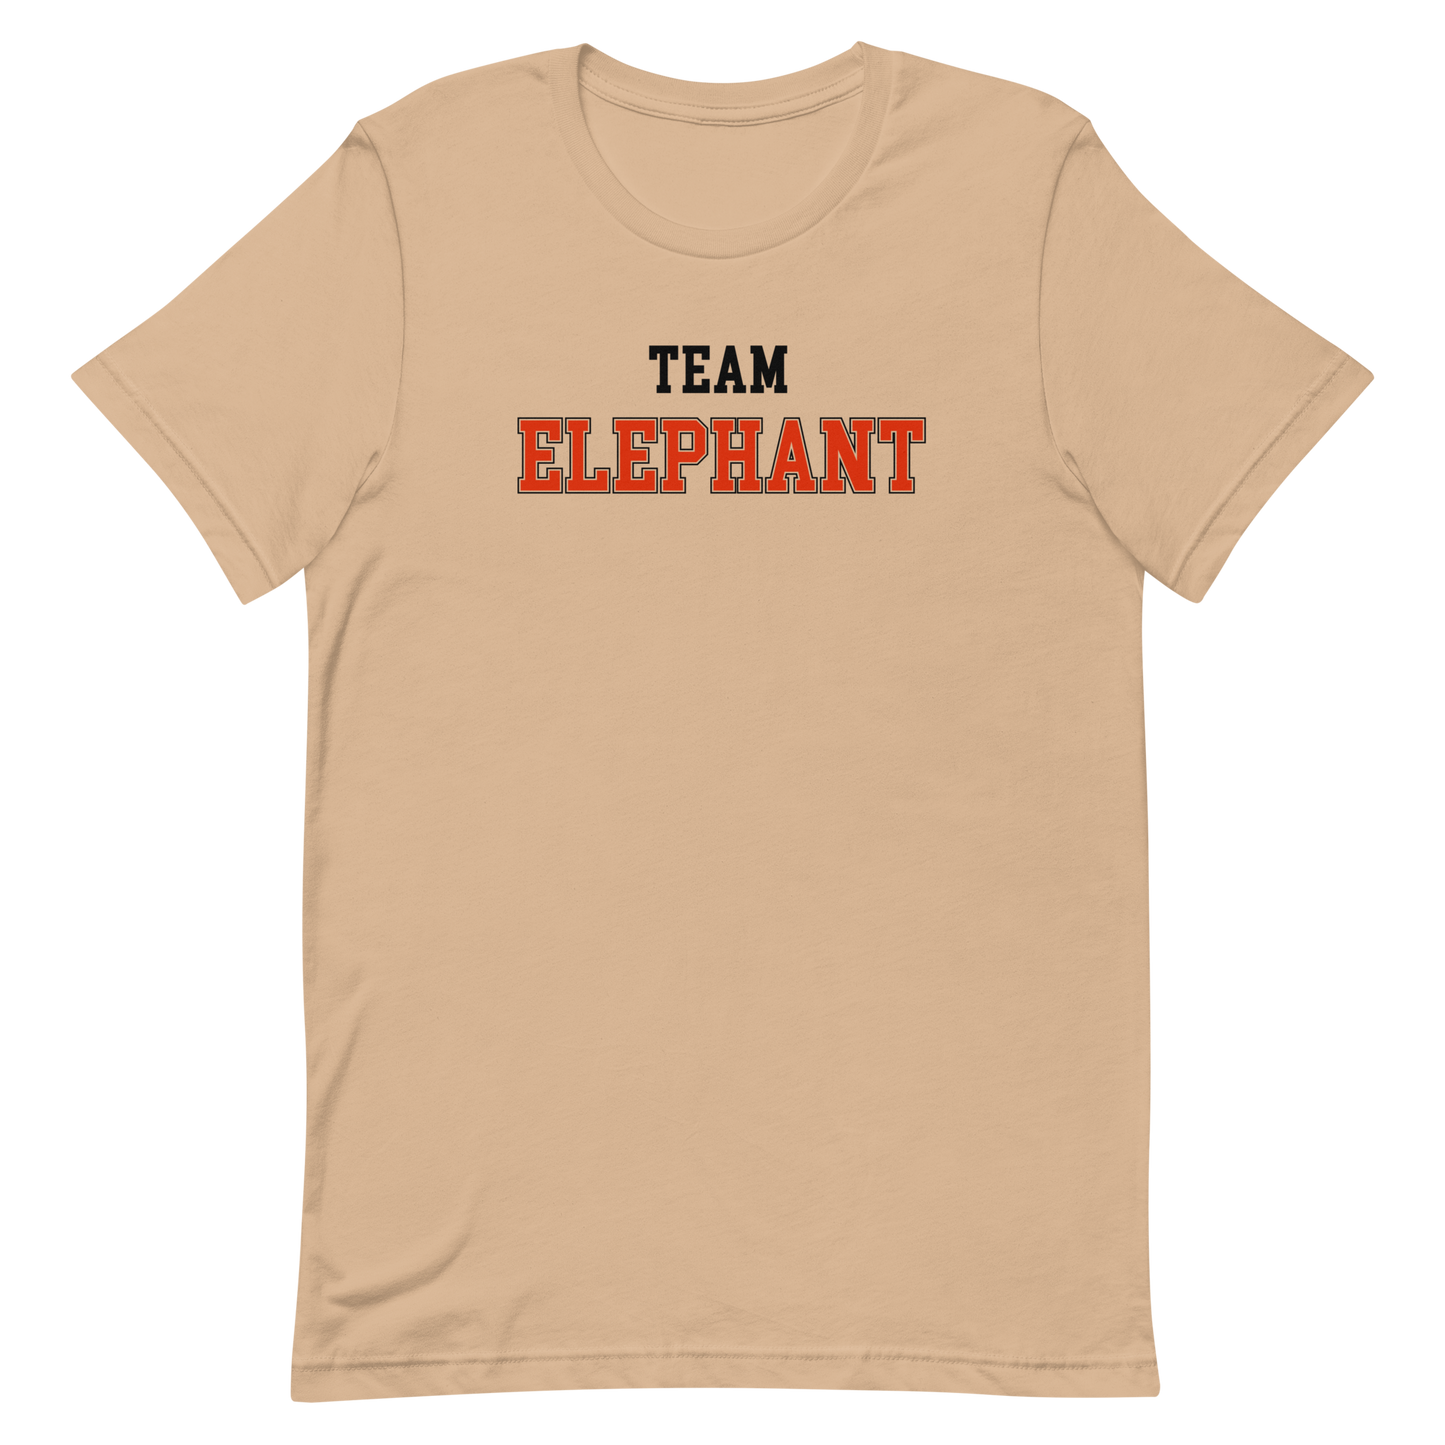 Team Elephant T-shirt